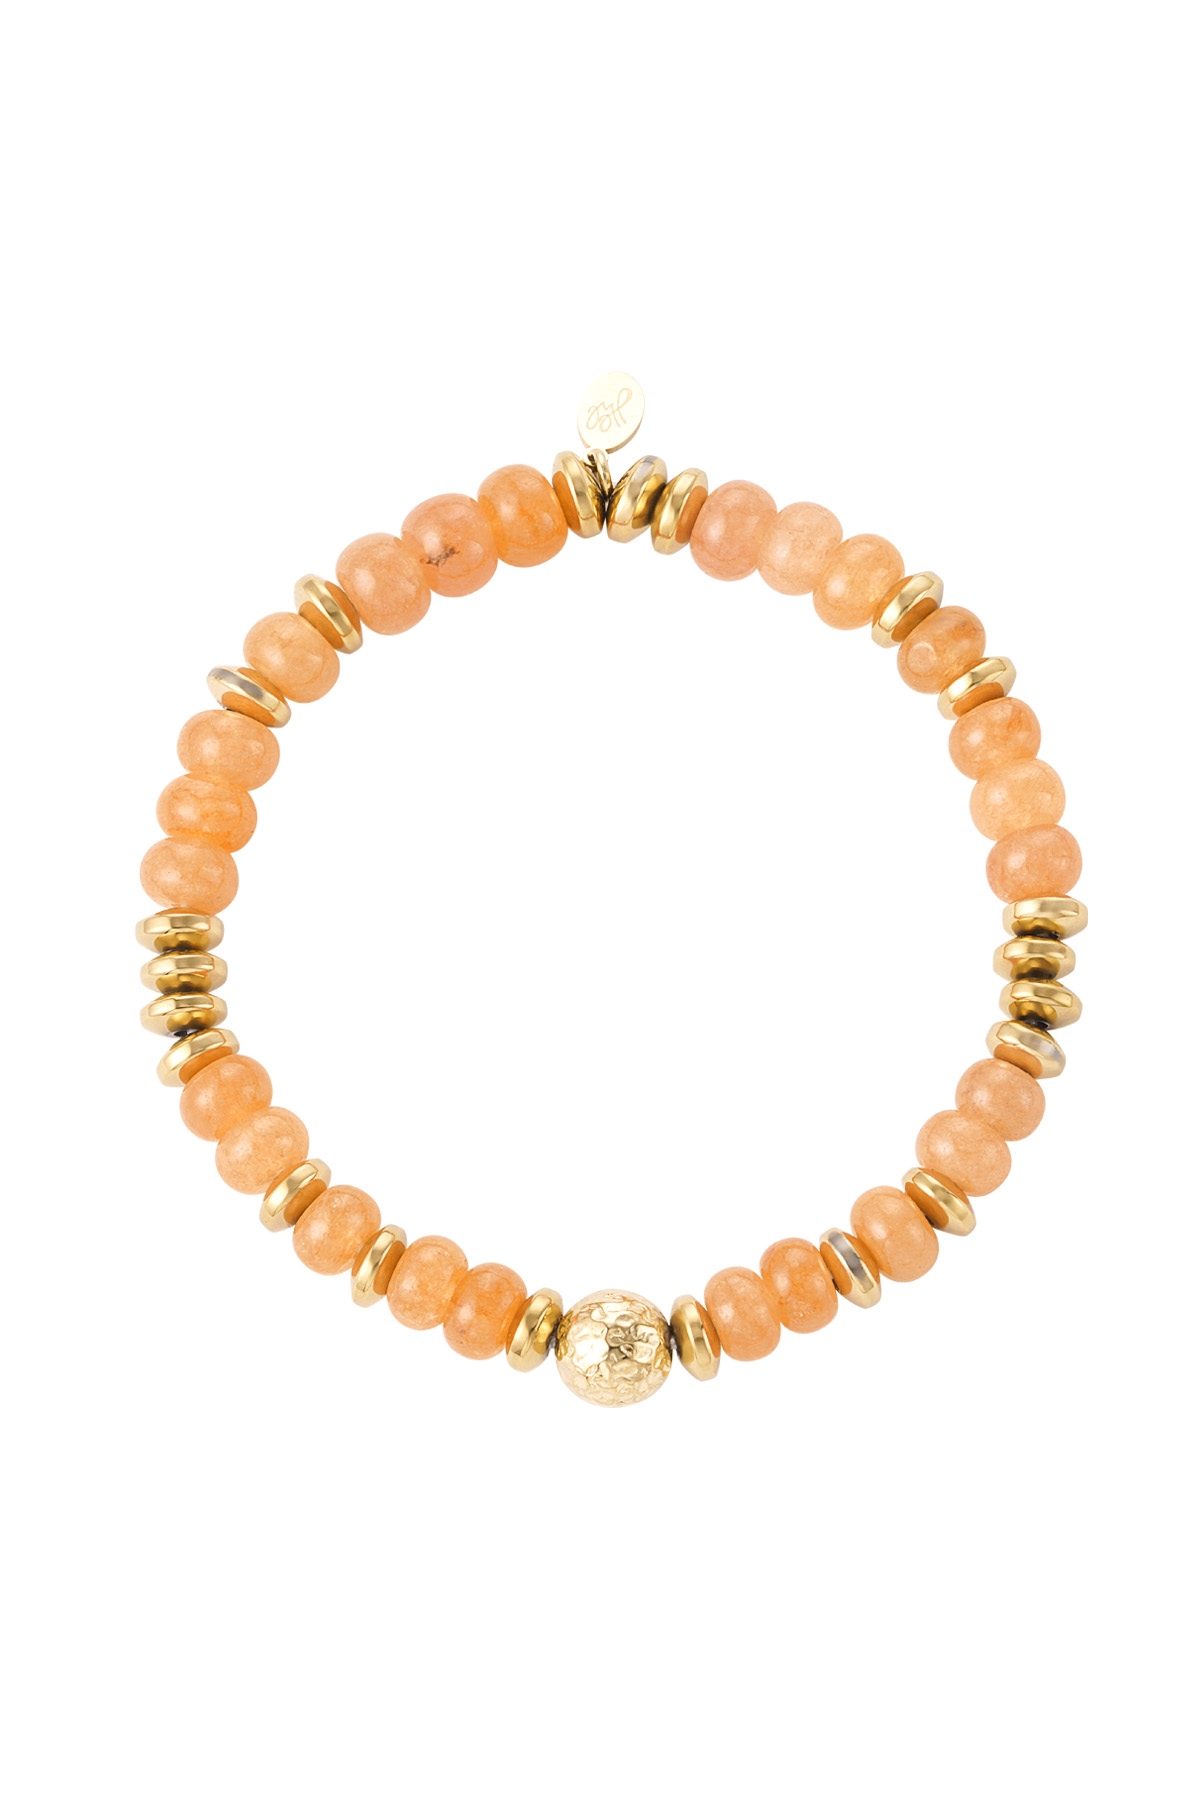 Armband kleurrijke steentjes - oranje & goud Steen 